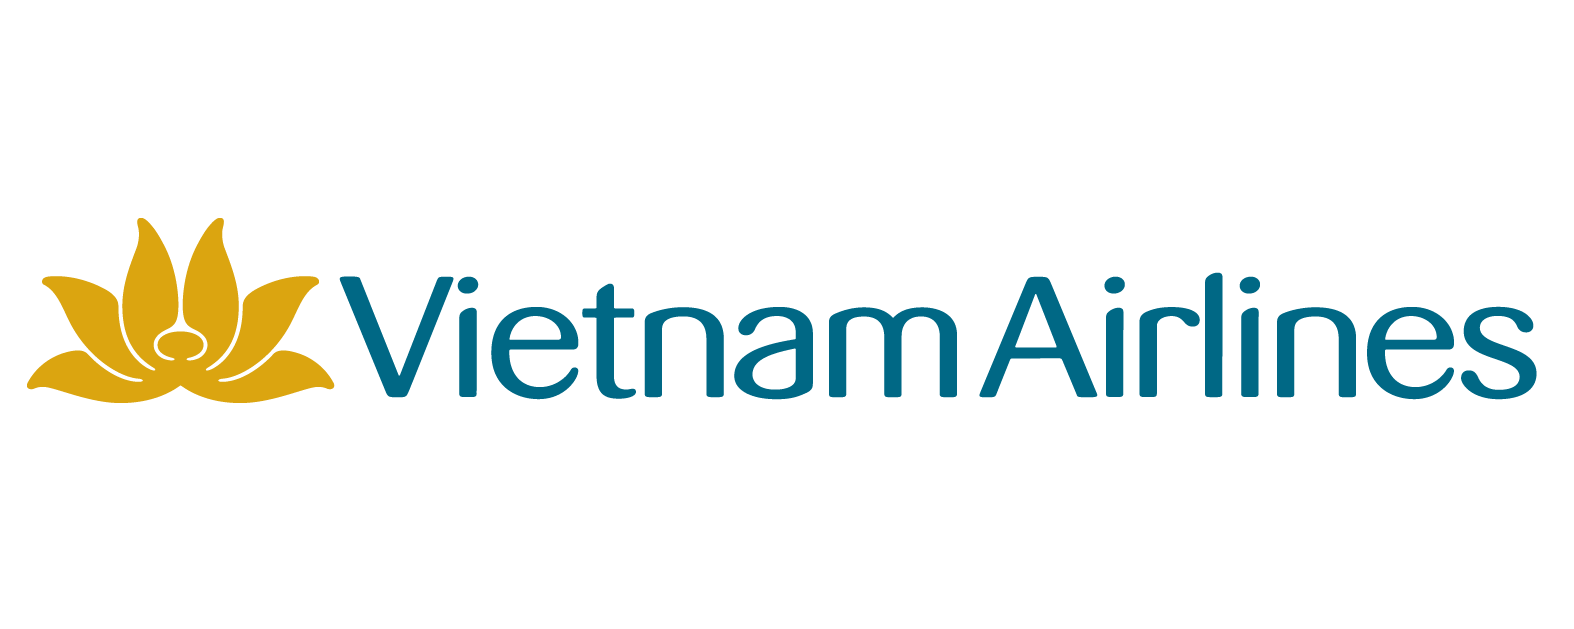 Vietnam Airlines - 1430